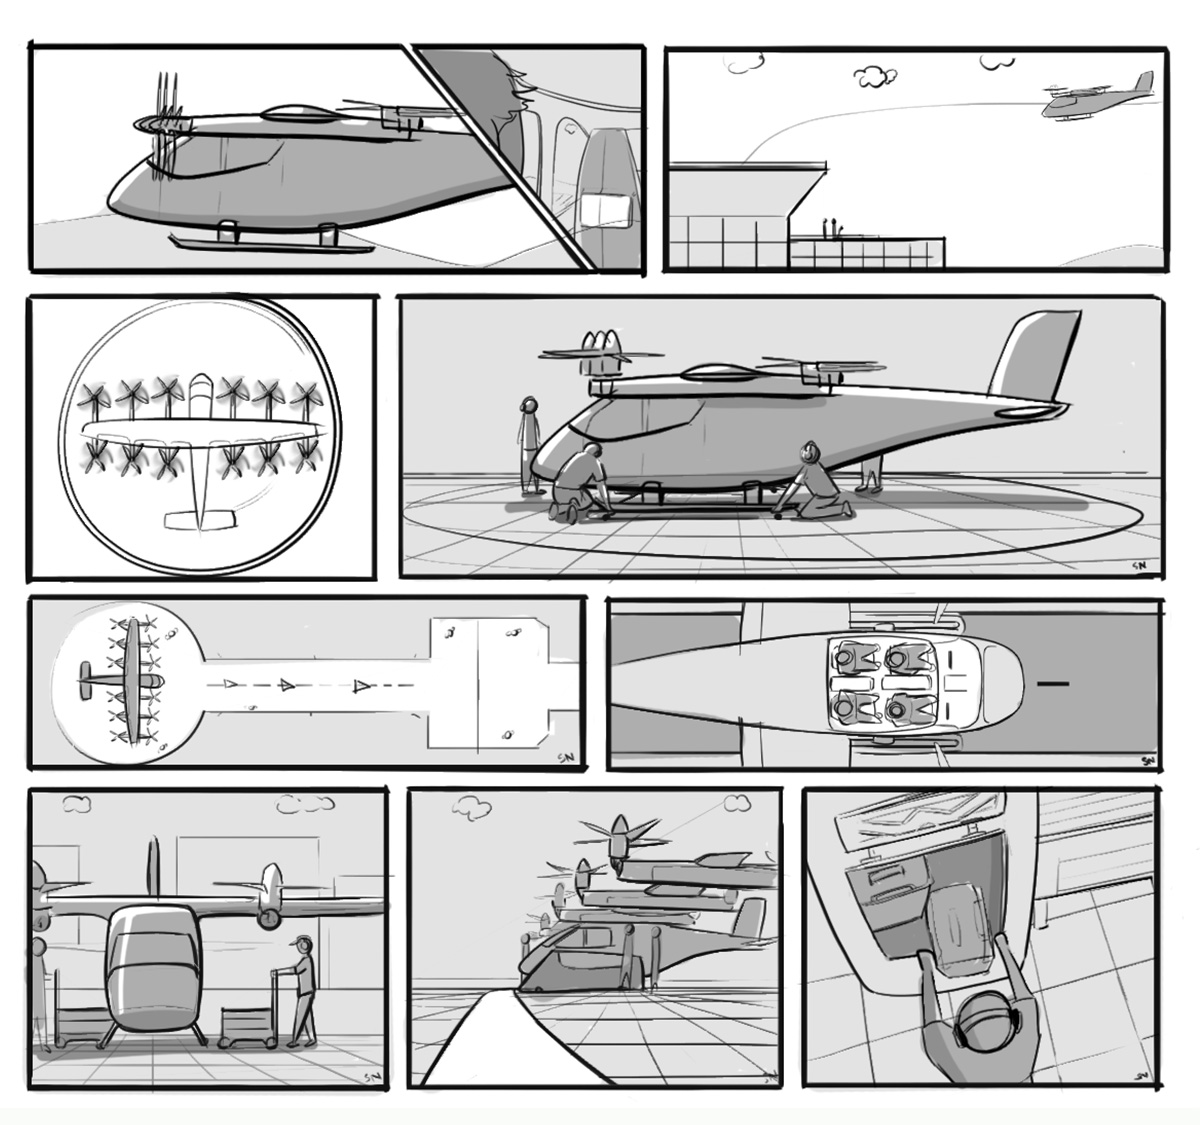 Descent and landing illustration